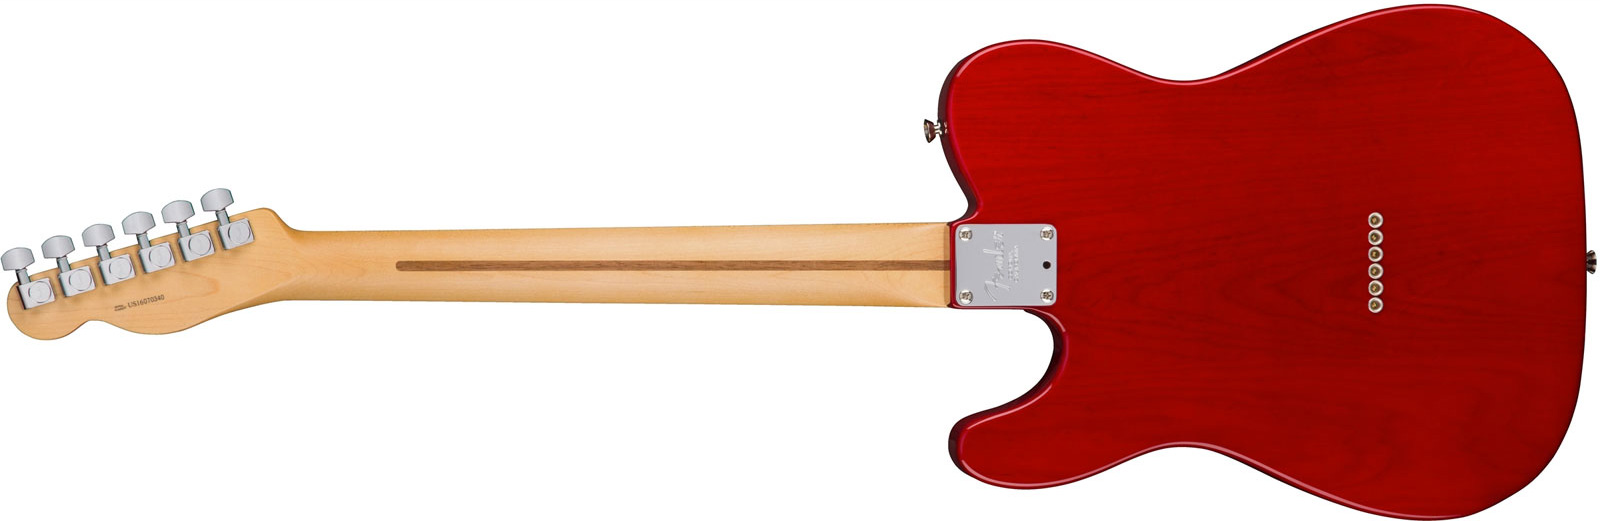 Fender Tele American Professional 2s Usa Rw - Crimson Red Transparent - Guitare Électrique Forme Str - Variation 1